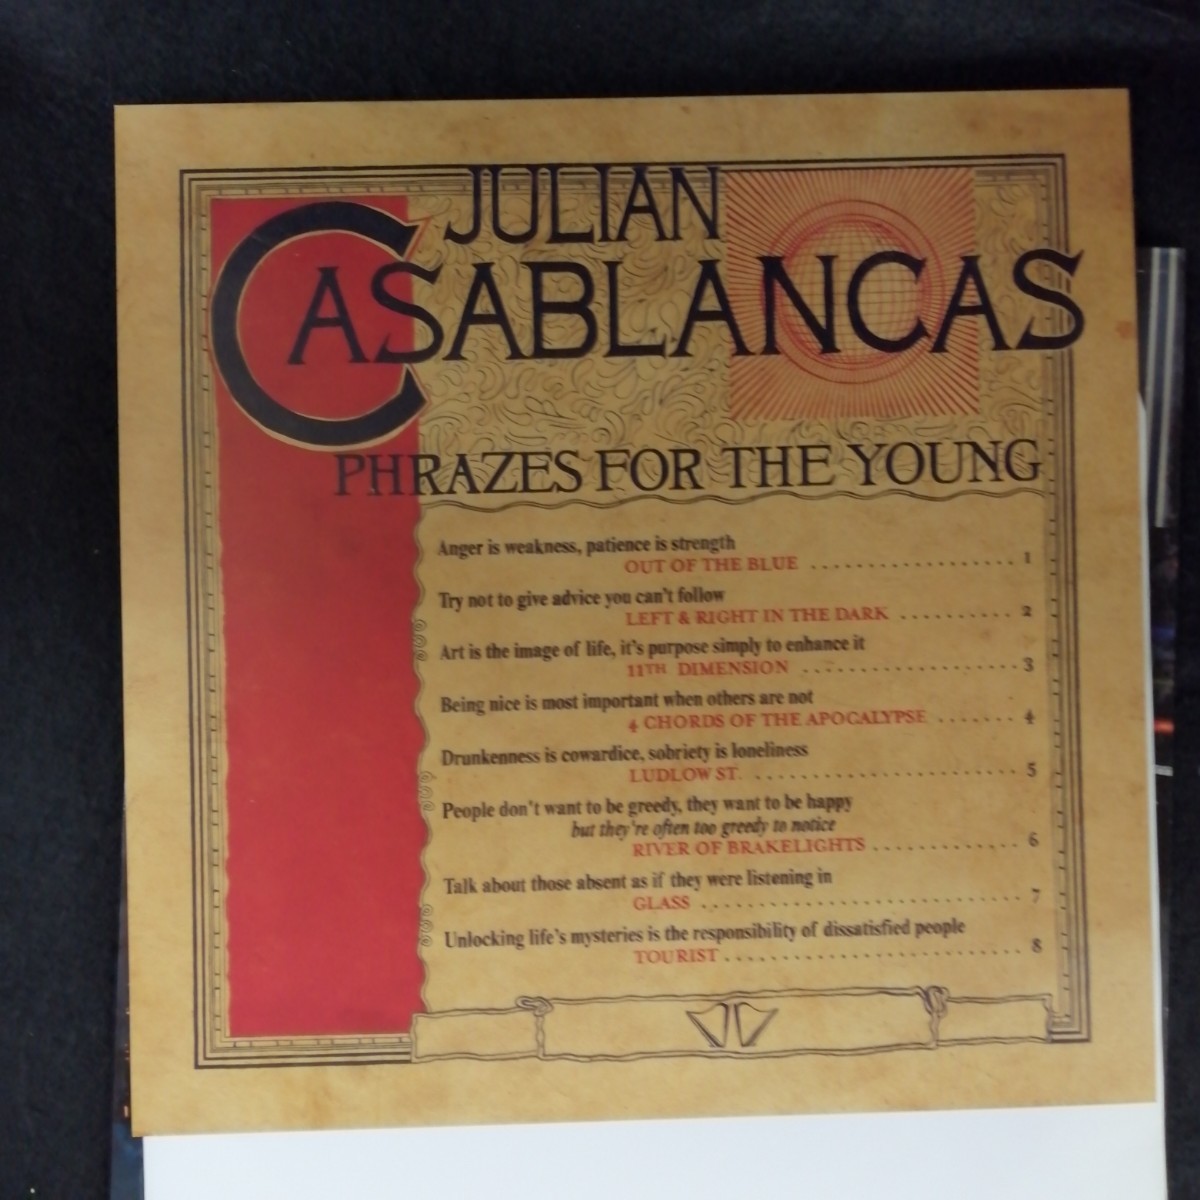 D03 б/у LP б/у запись JULIAN CASABLANCAS phrazes for the young RTRADLP525 UK запись Julien Casablanca s ход sstrokes